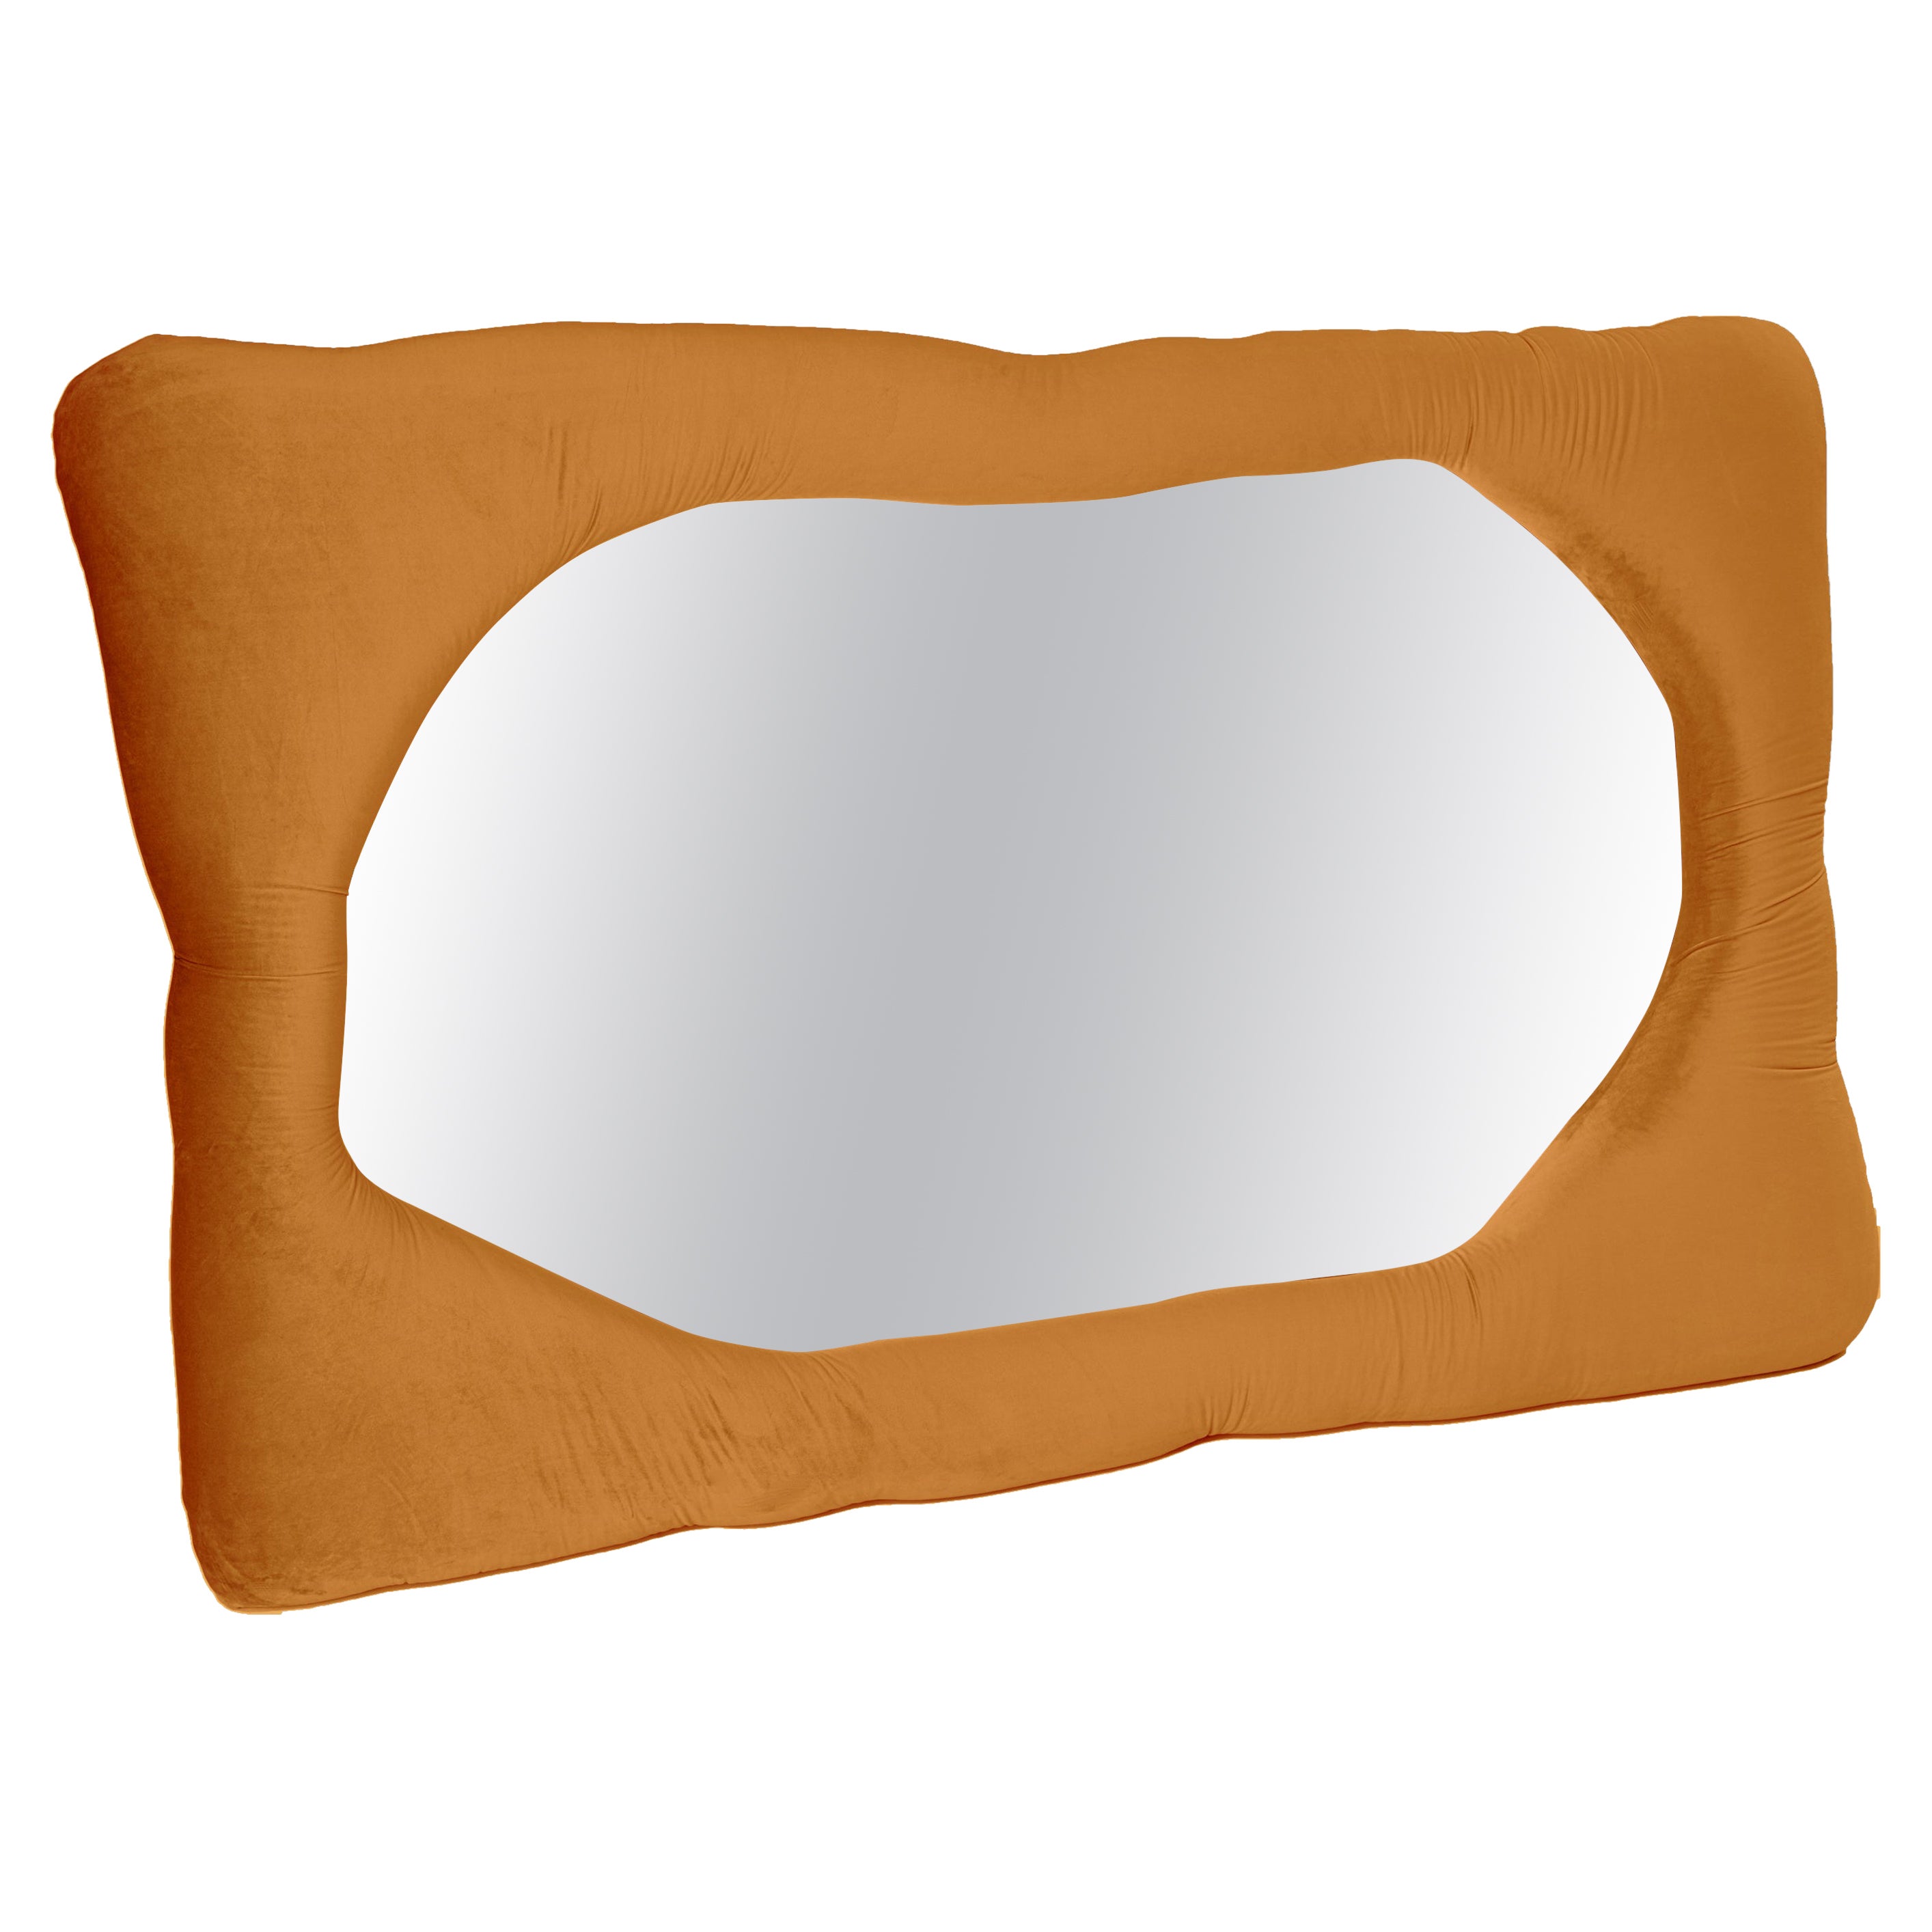 Velvet Biomorphic Mirror in Orange by Brandi Howe, REP by Tuleste Factory For Sale